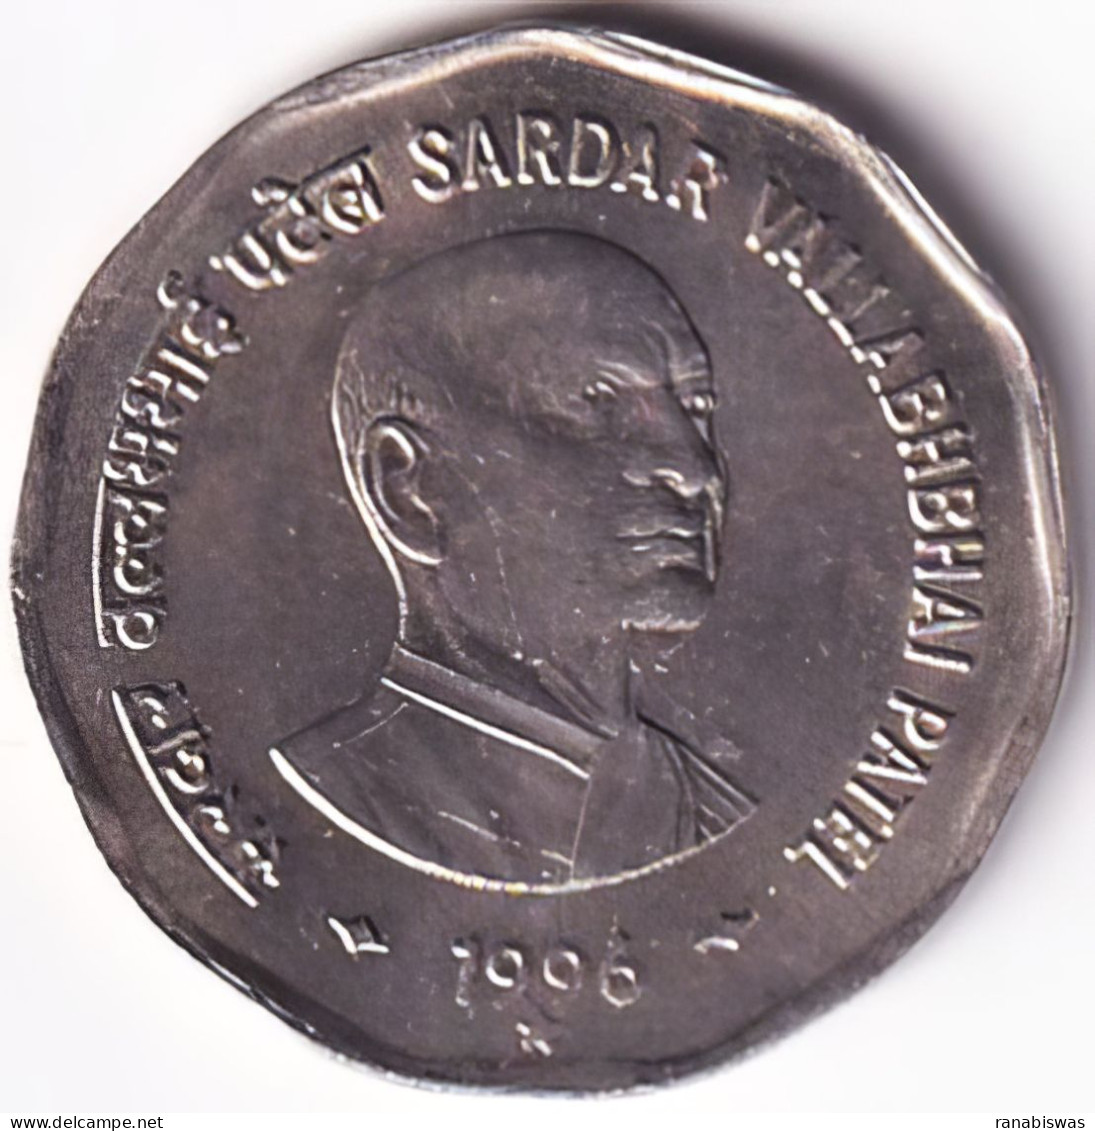 INDIA COIN LOT 74, 2 RUPEES 1996, SARDAR BALLABHBHAI PATEL, HYDERABAD MINT, XF, SCARE - India